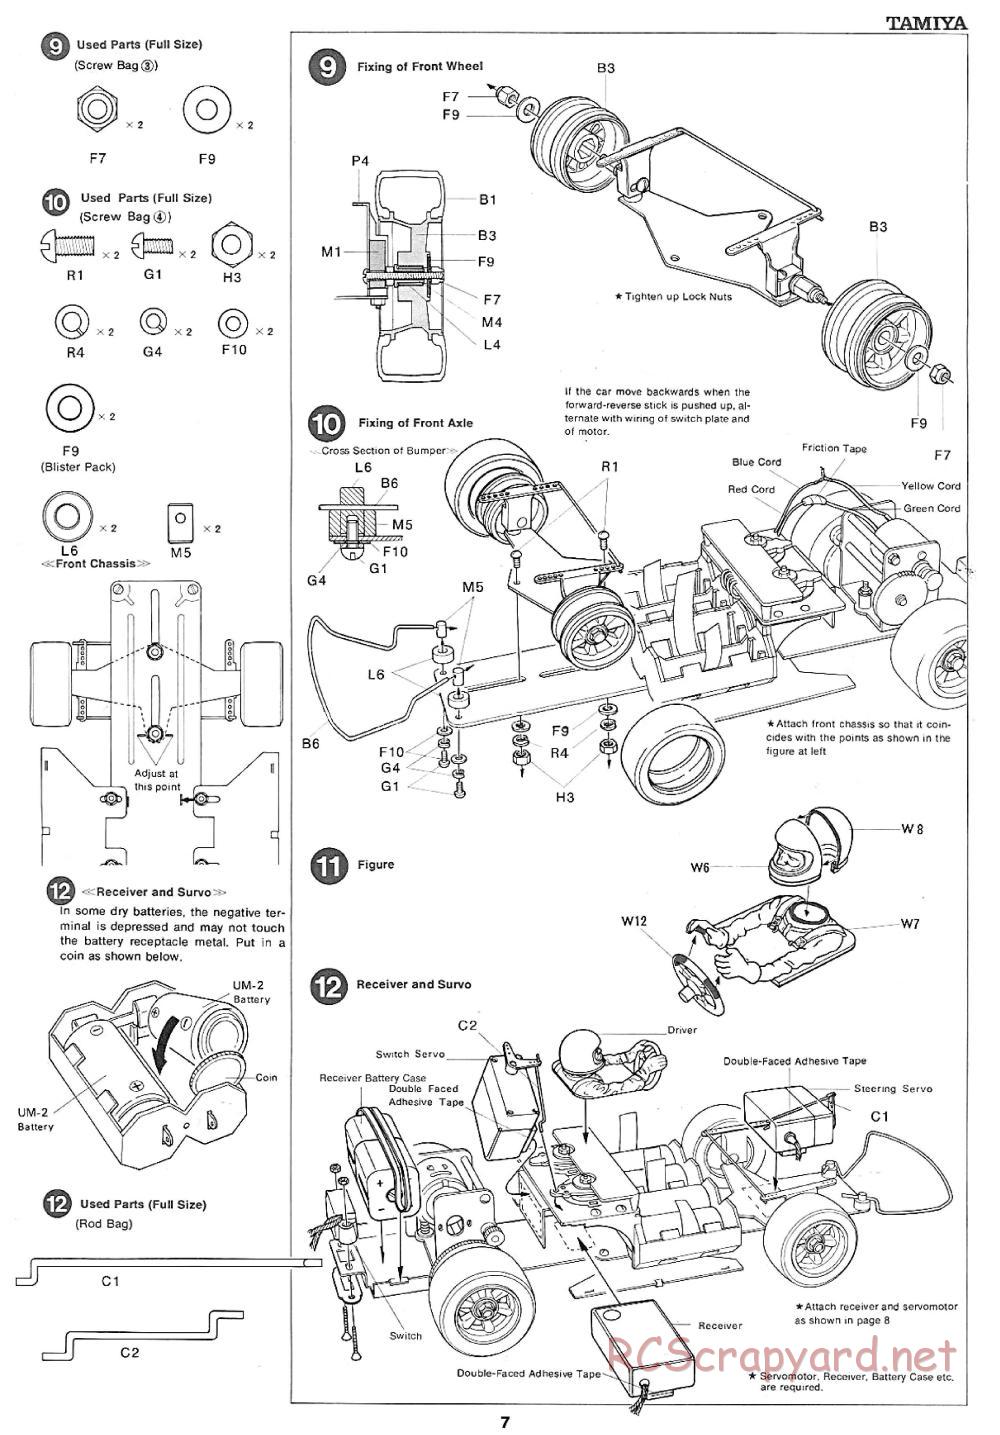 Tamiya - Porsche 934 Turbo RSR - 58001 - Manual - Page 7